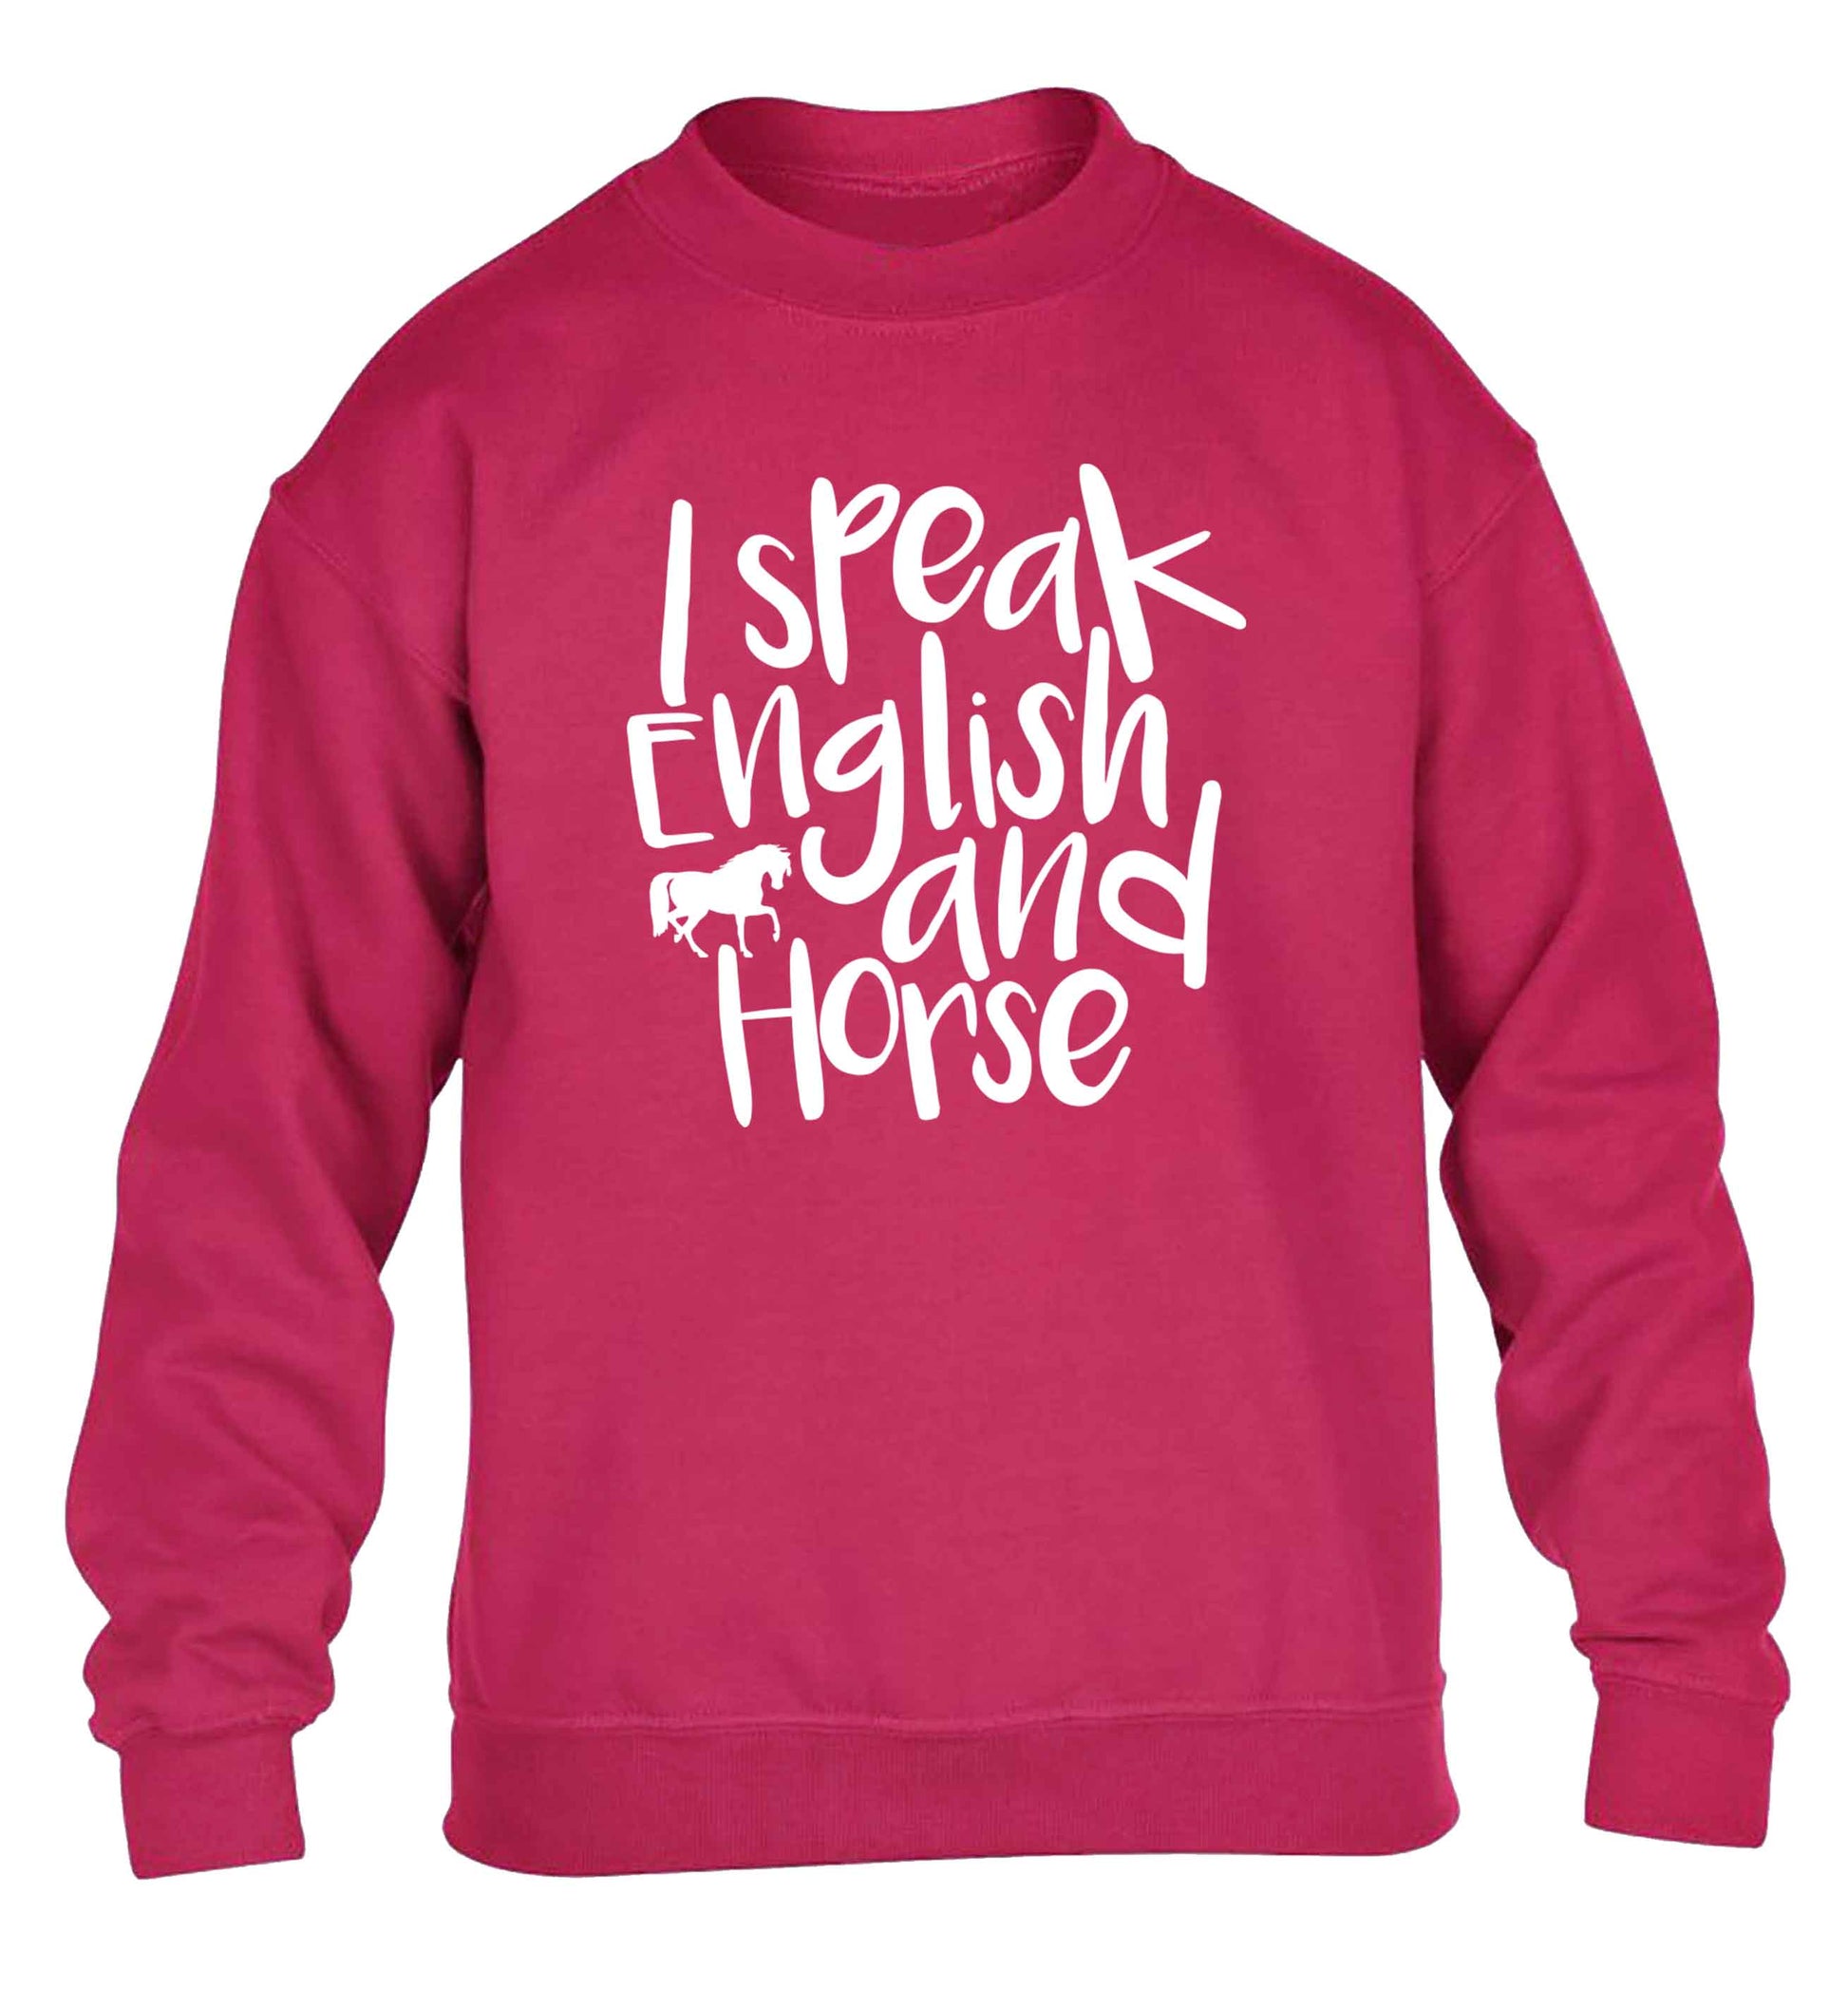 I speak English and horse children's pink sweater 12-13 Years